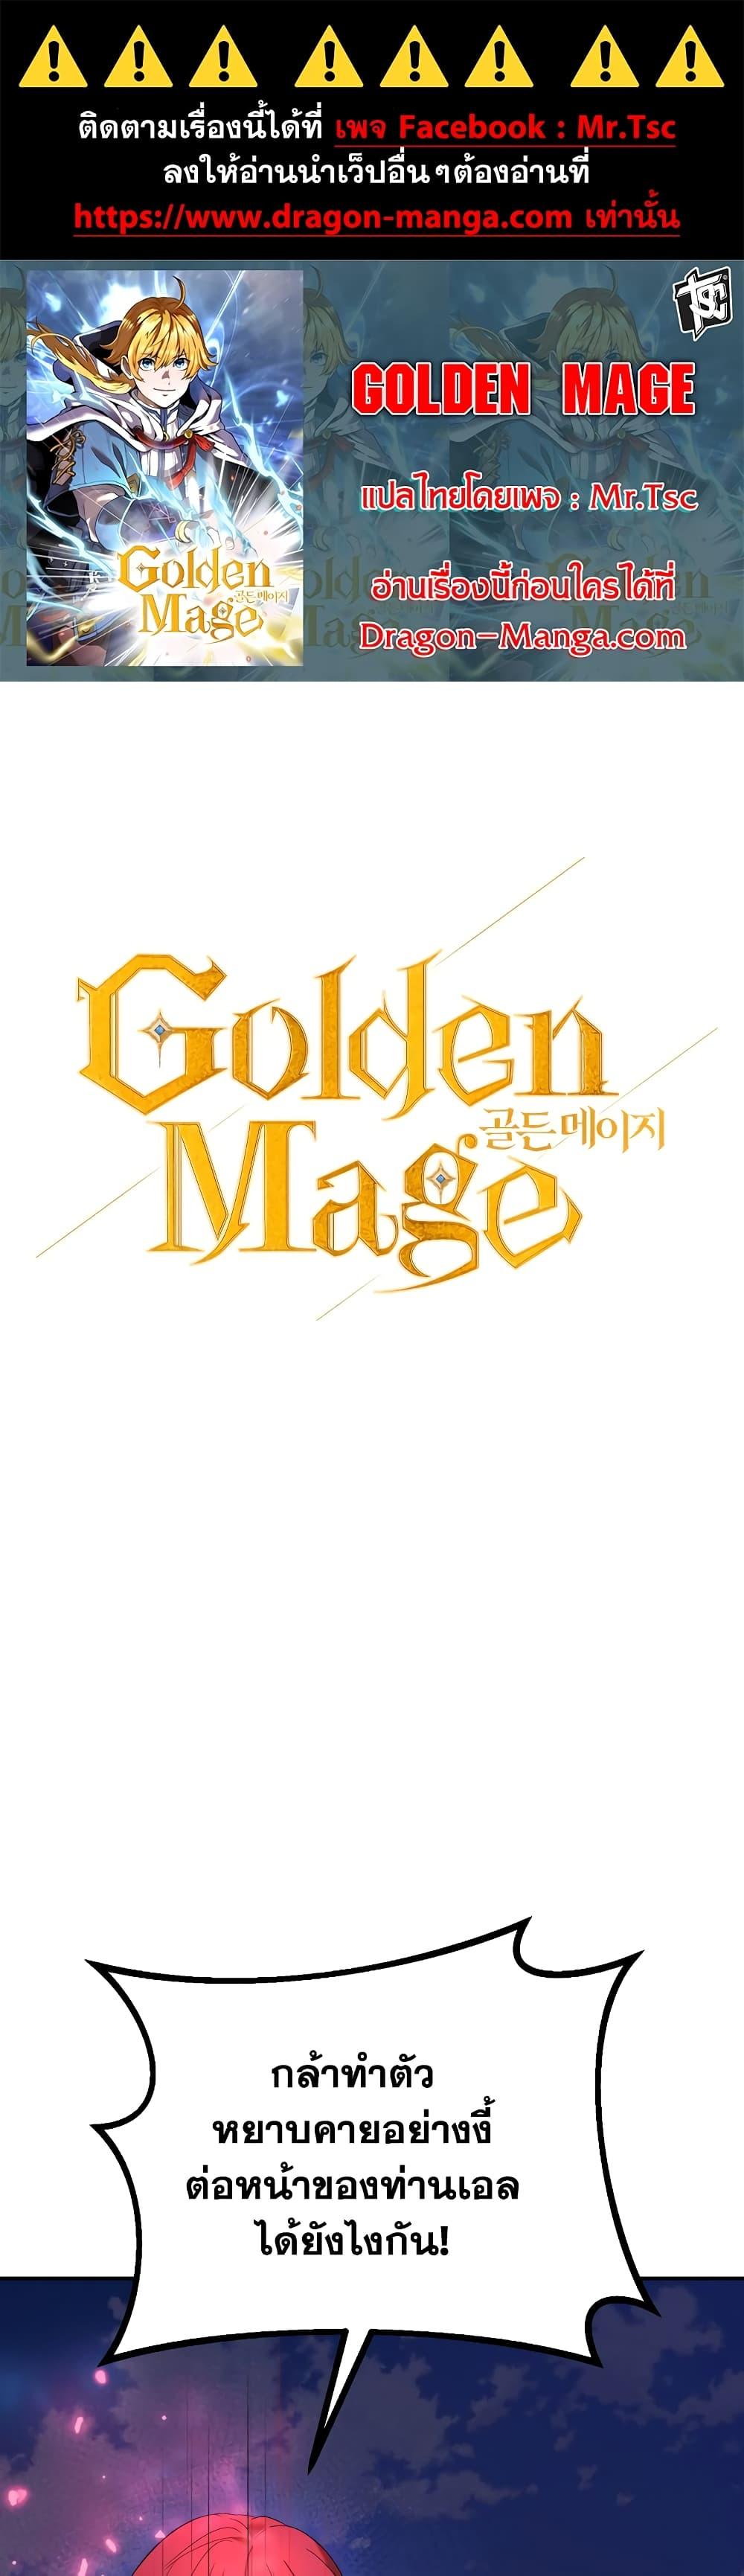 Golden Mage 23 01